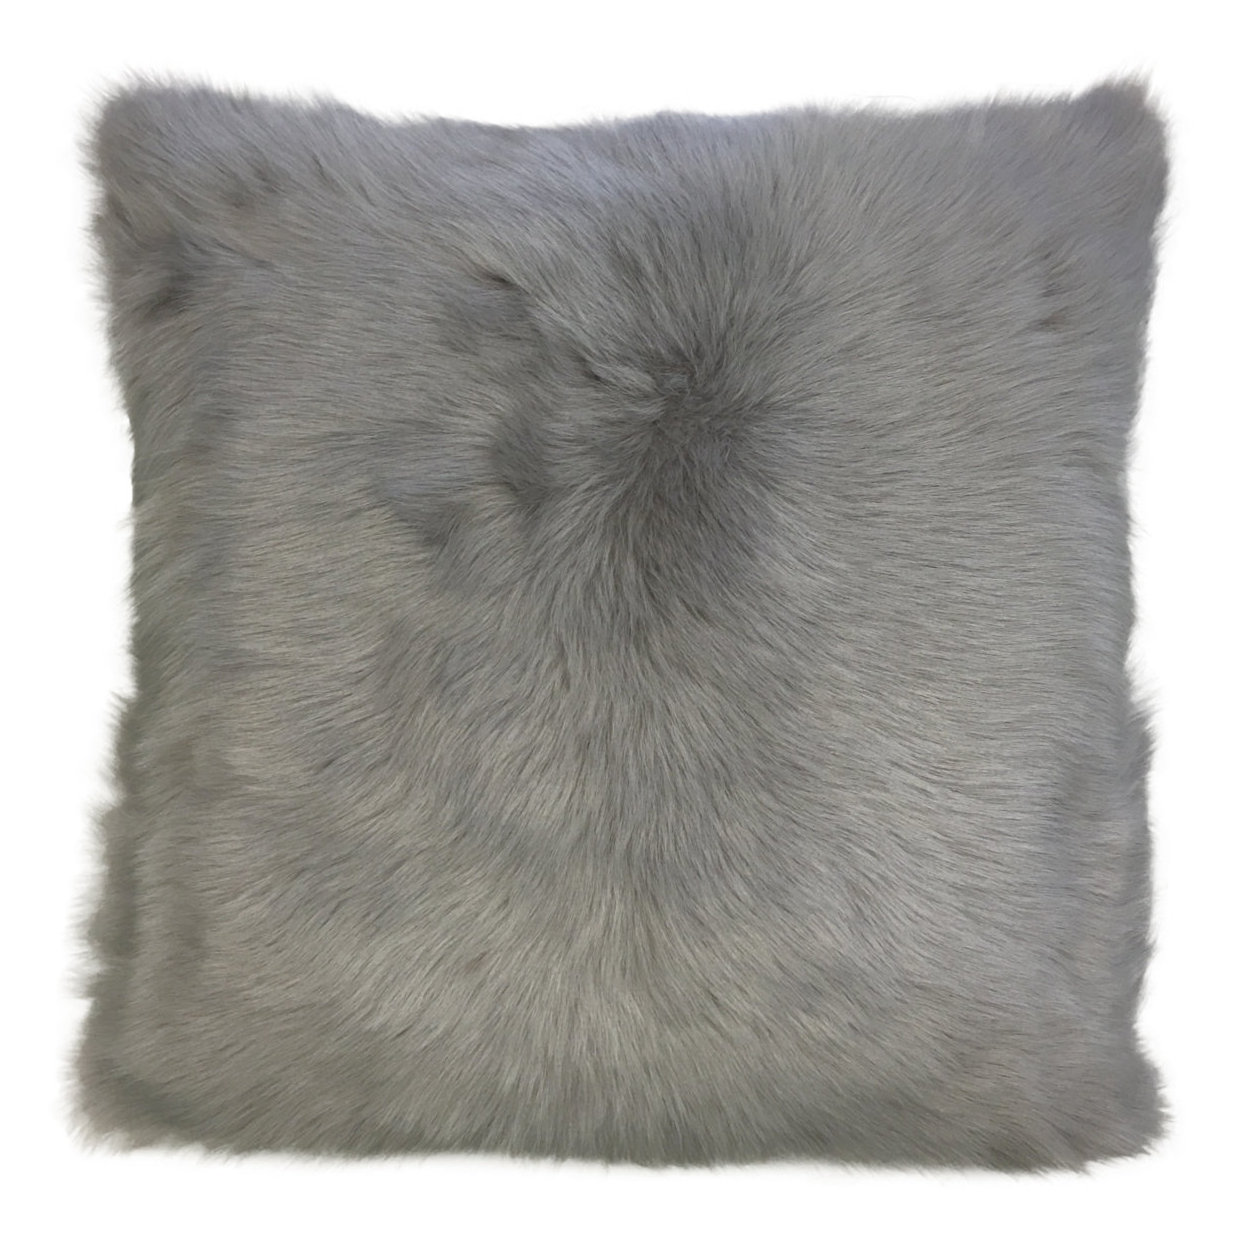 Shearling Pillow-Irish-50x50cm-SPIRIS2645050 - ANVOGG FEEL SHEARLING | ANVOGG